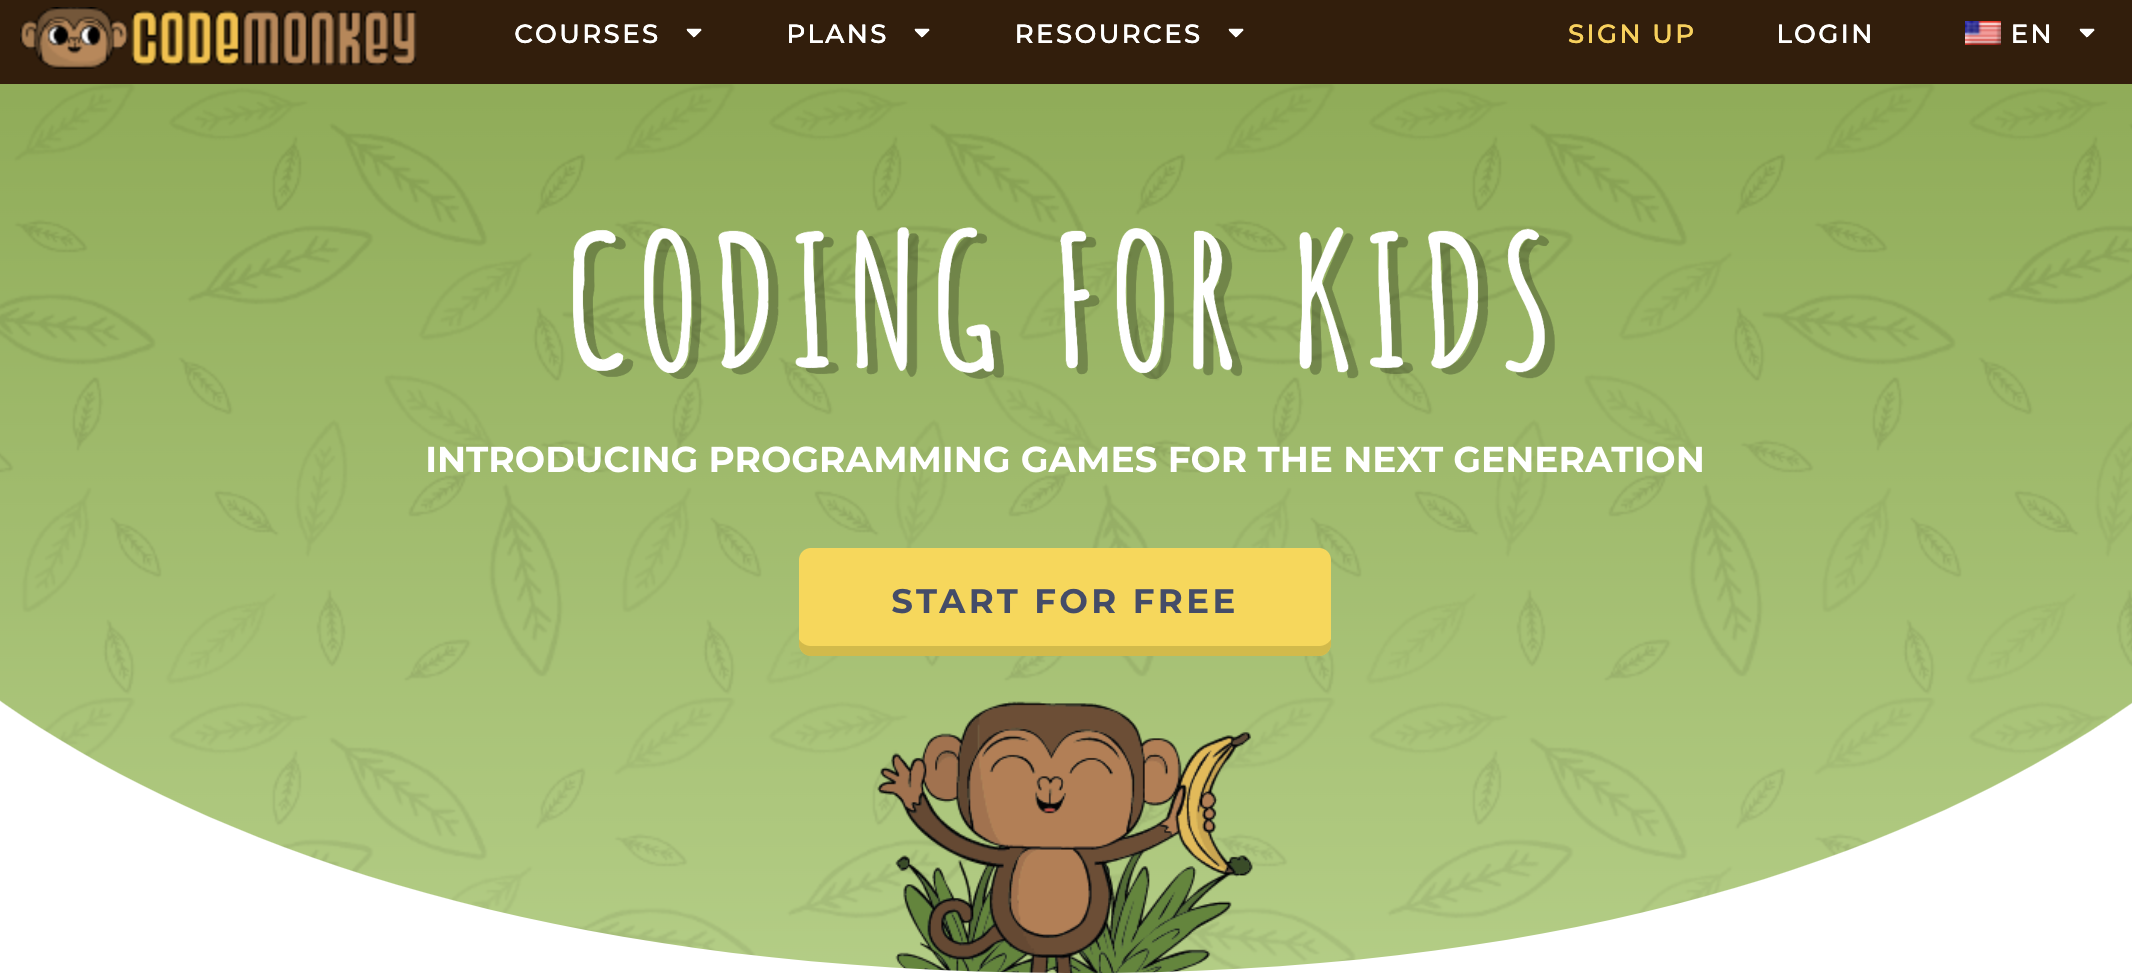 Codemonkey best coding websites for kids